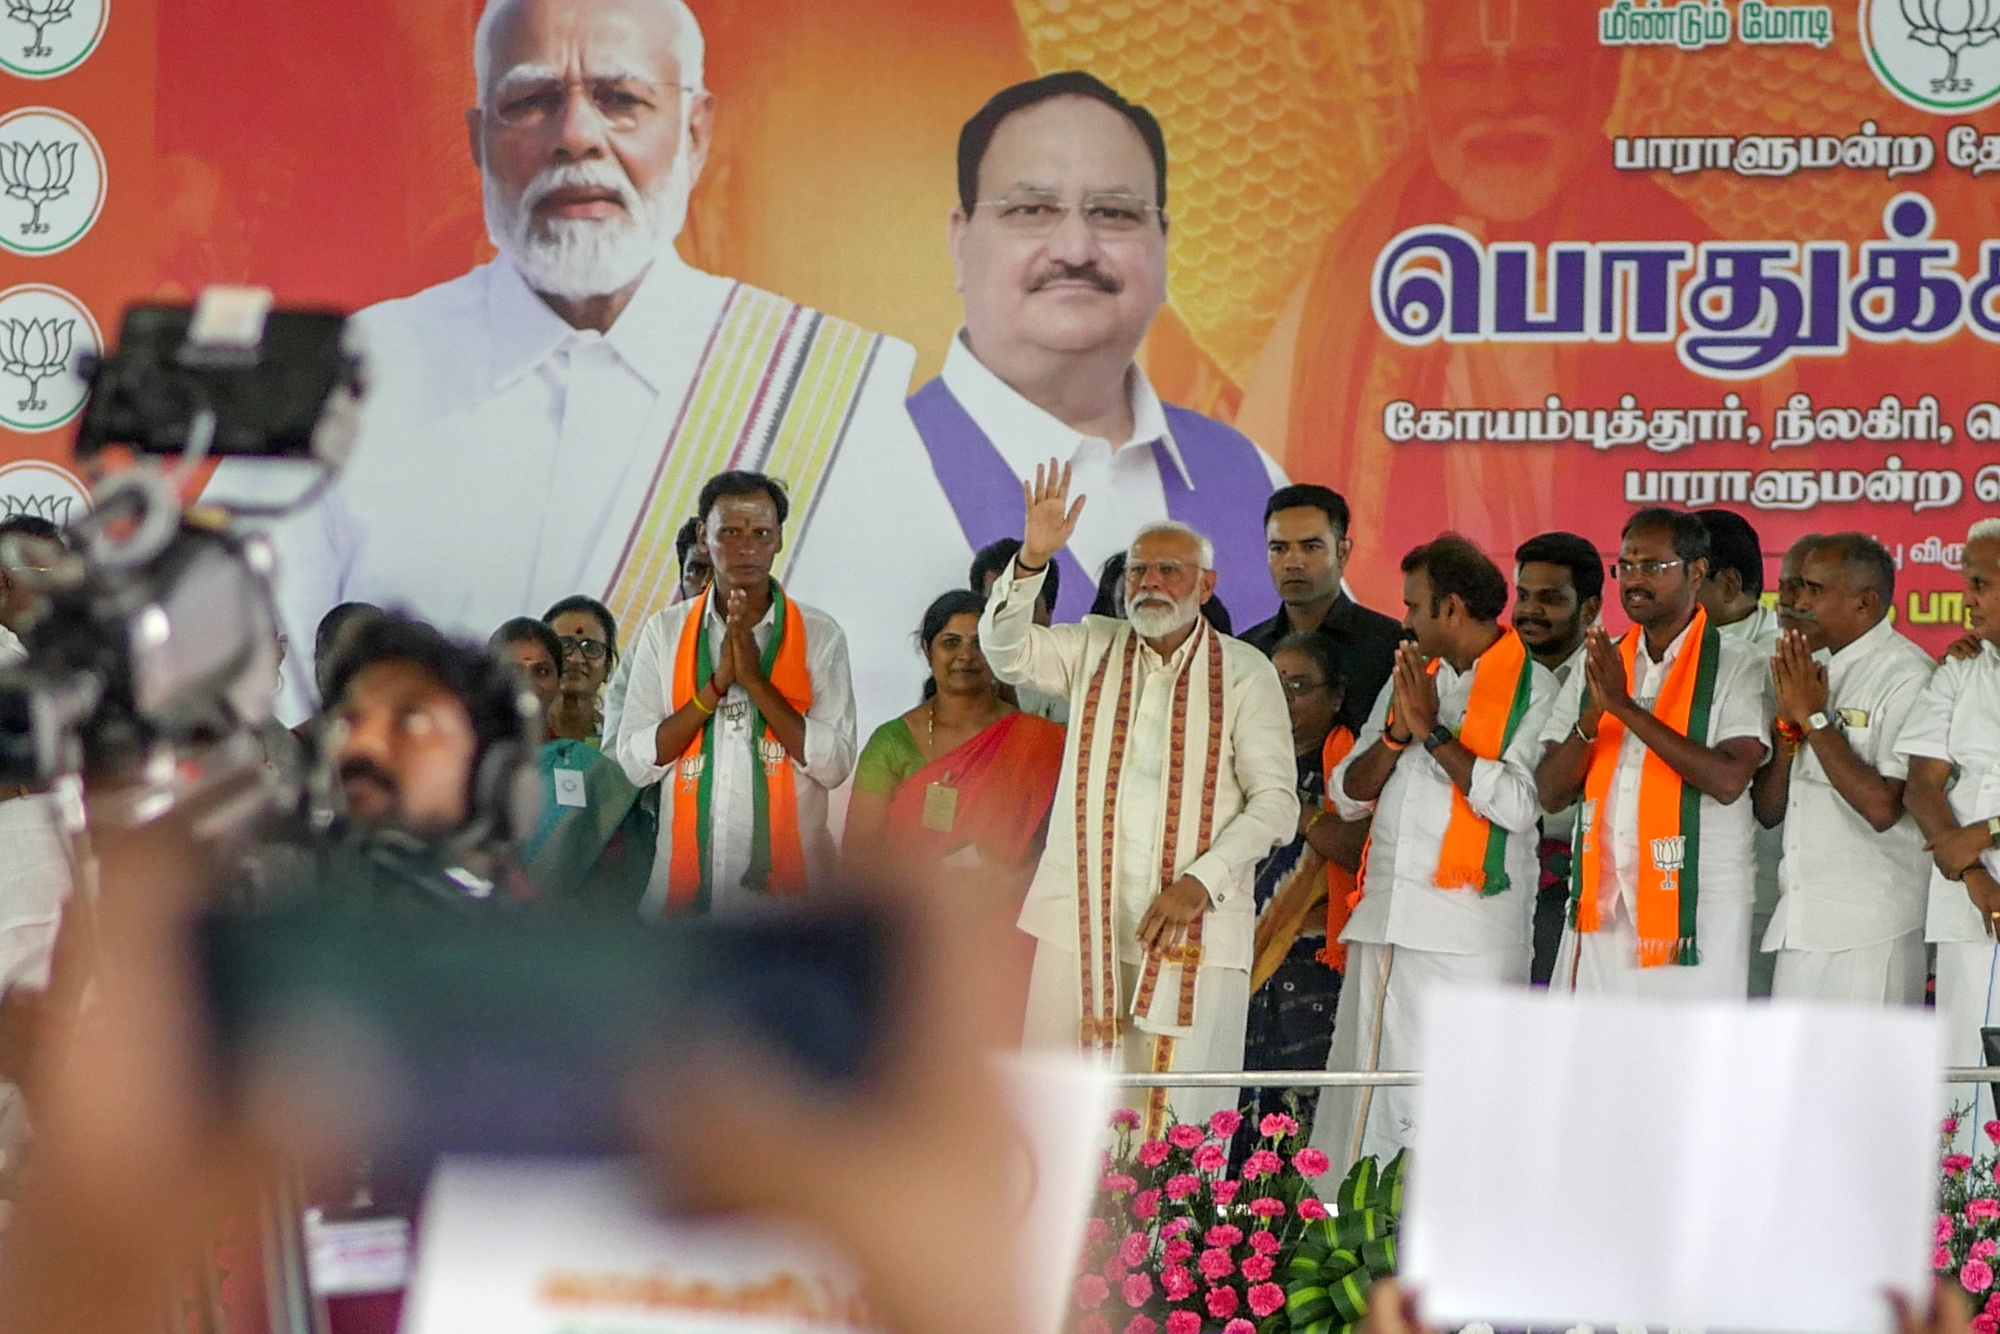 Narendra Modi during a campaign rally in Coimbatore, Tamil Nadu, India.